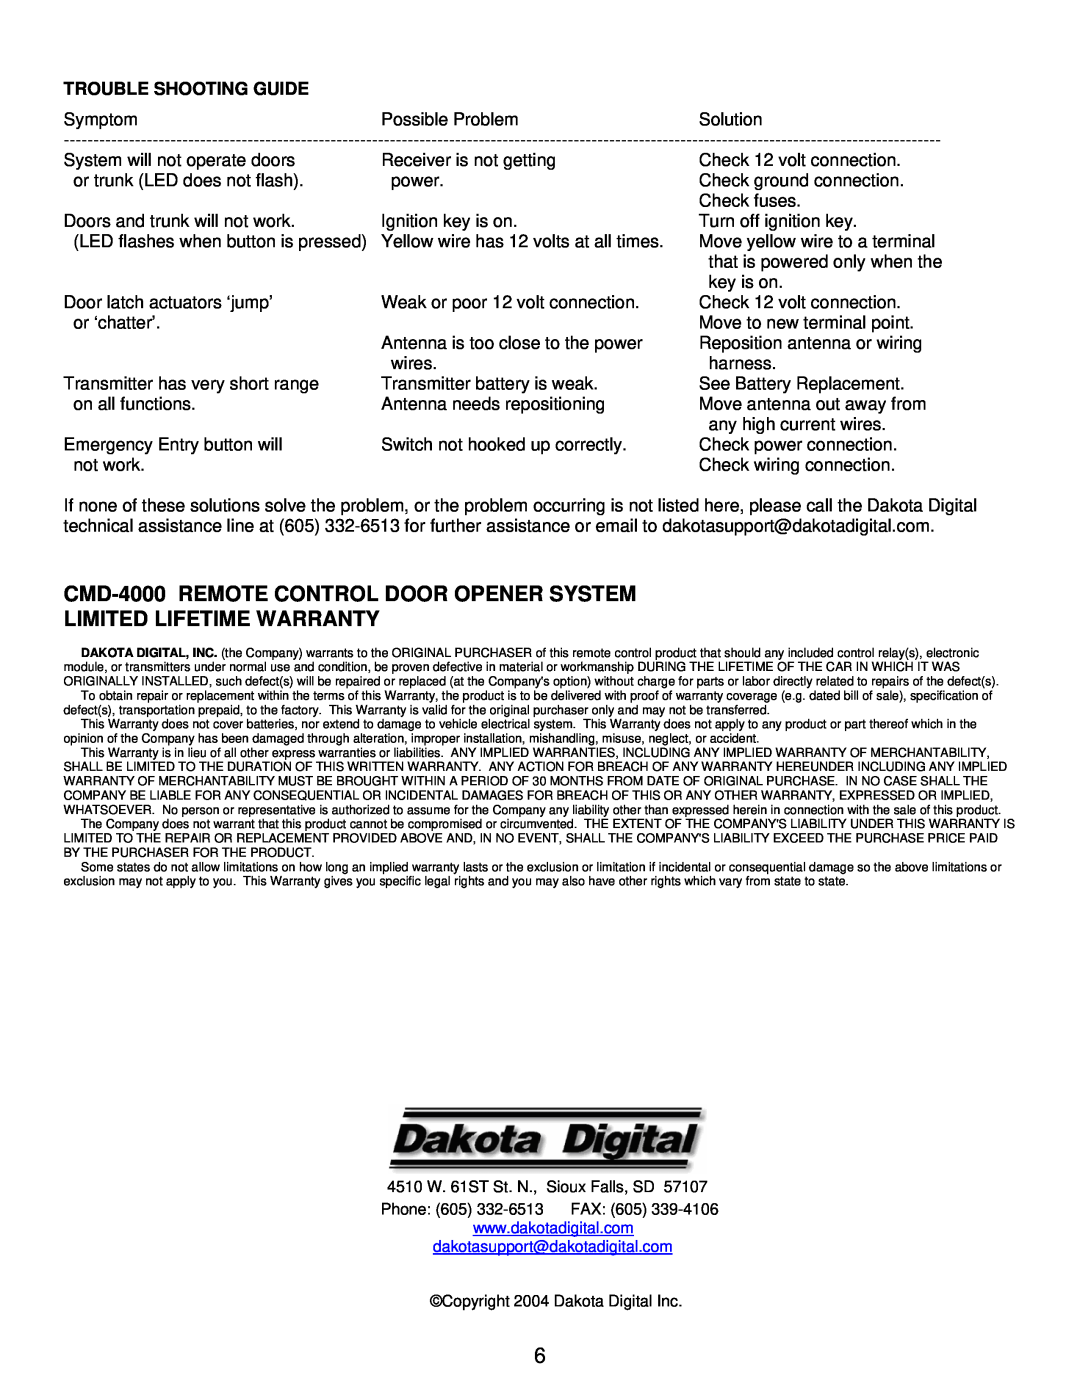 Dakota Digital manual CMD-4000REMOTE CONTROL DOOR OPENER SYSTEM, Limited Lifetime Warranty, Phone 605 332-6513FAX 